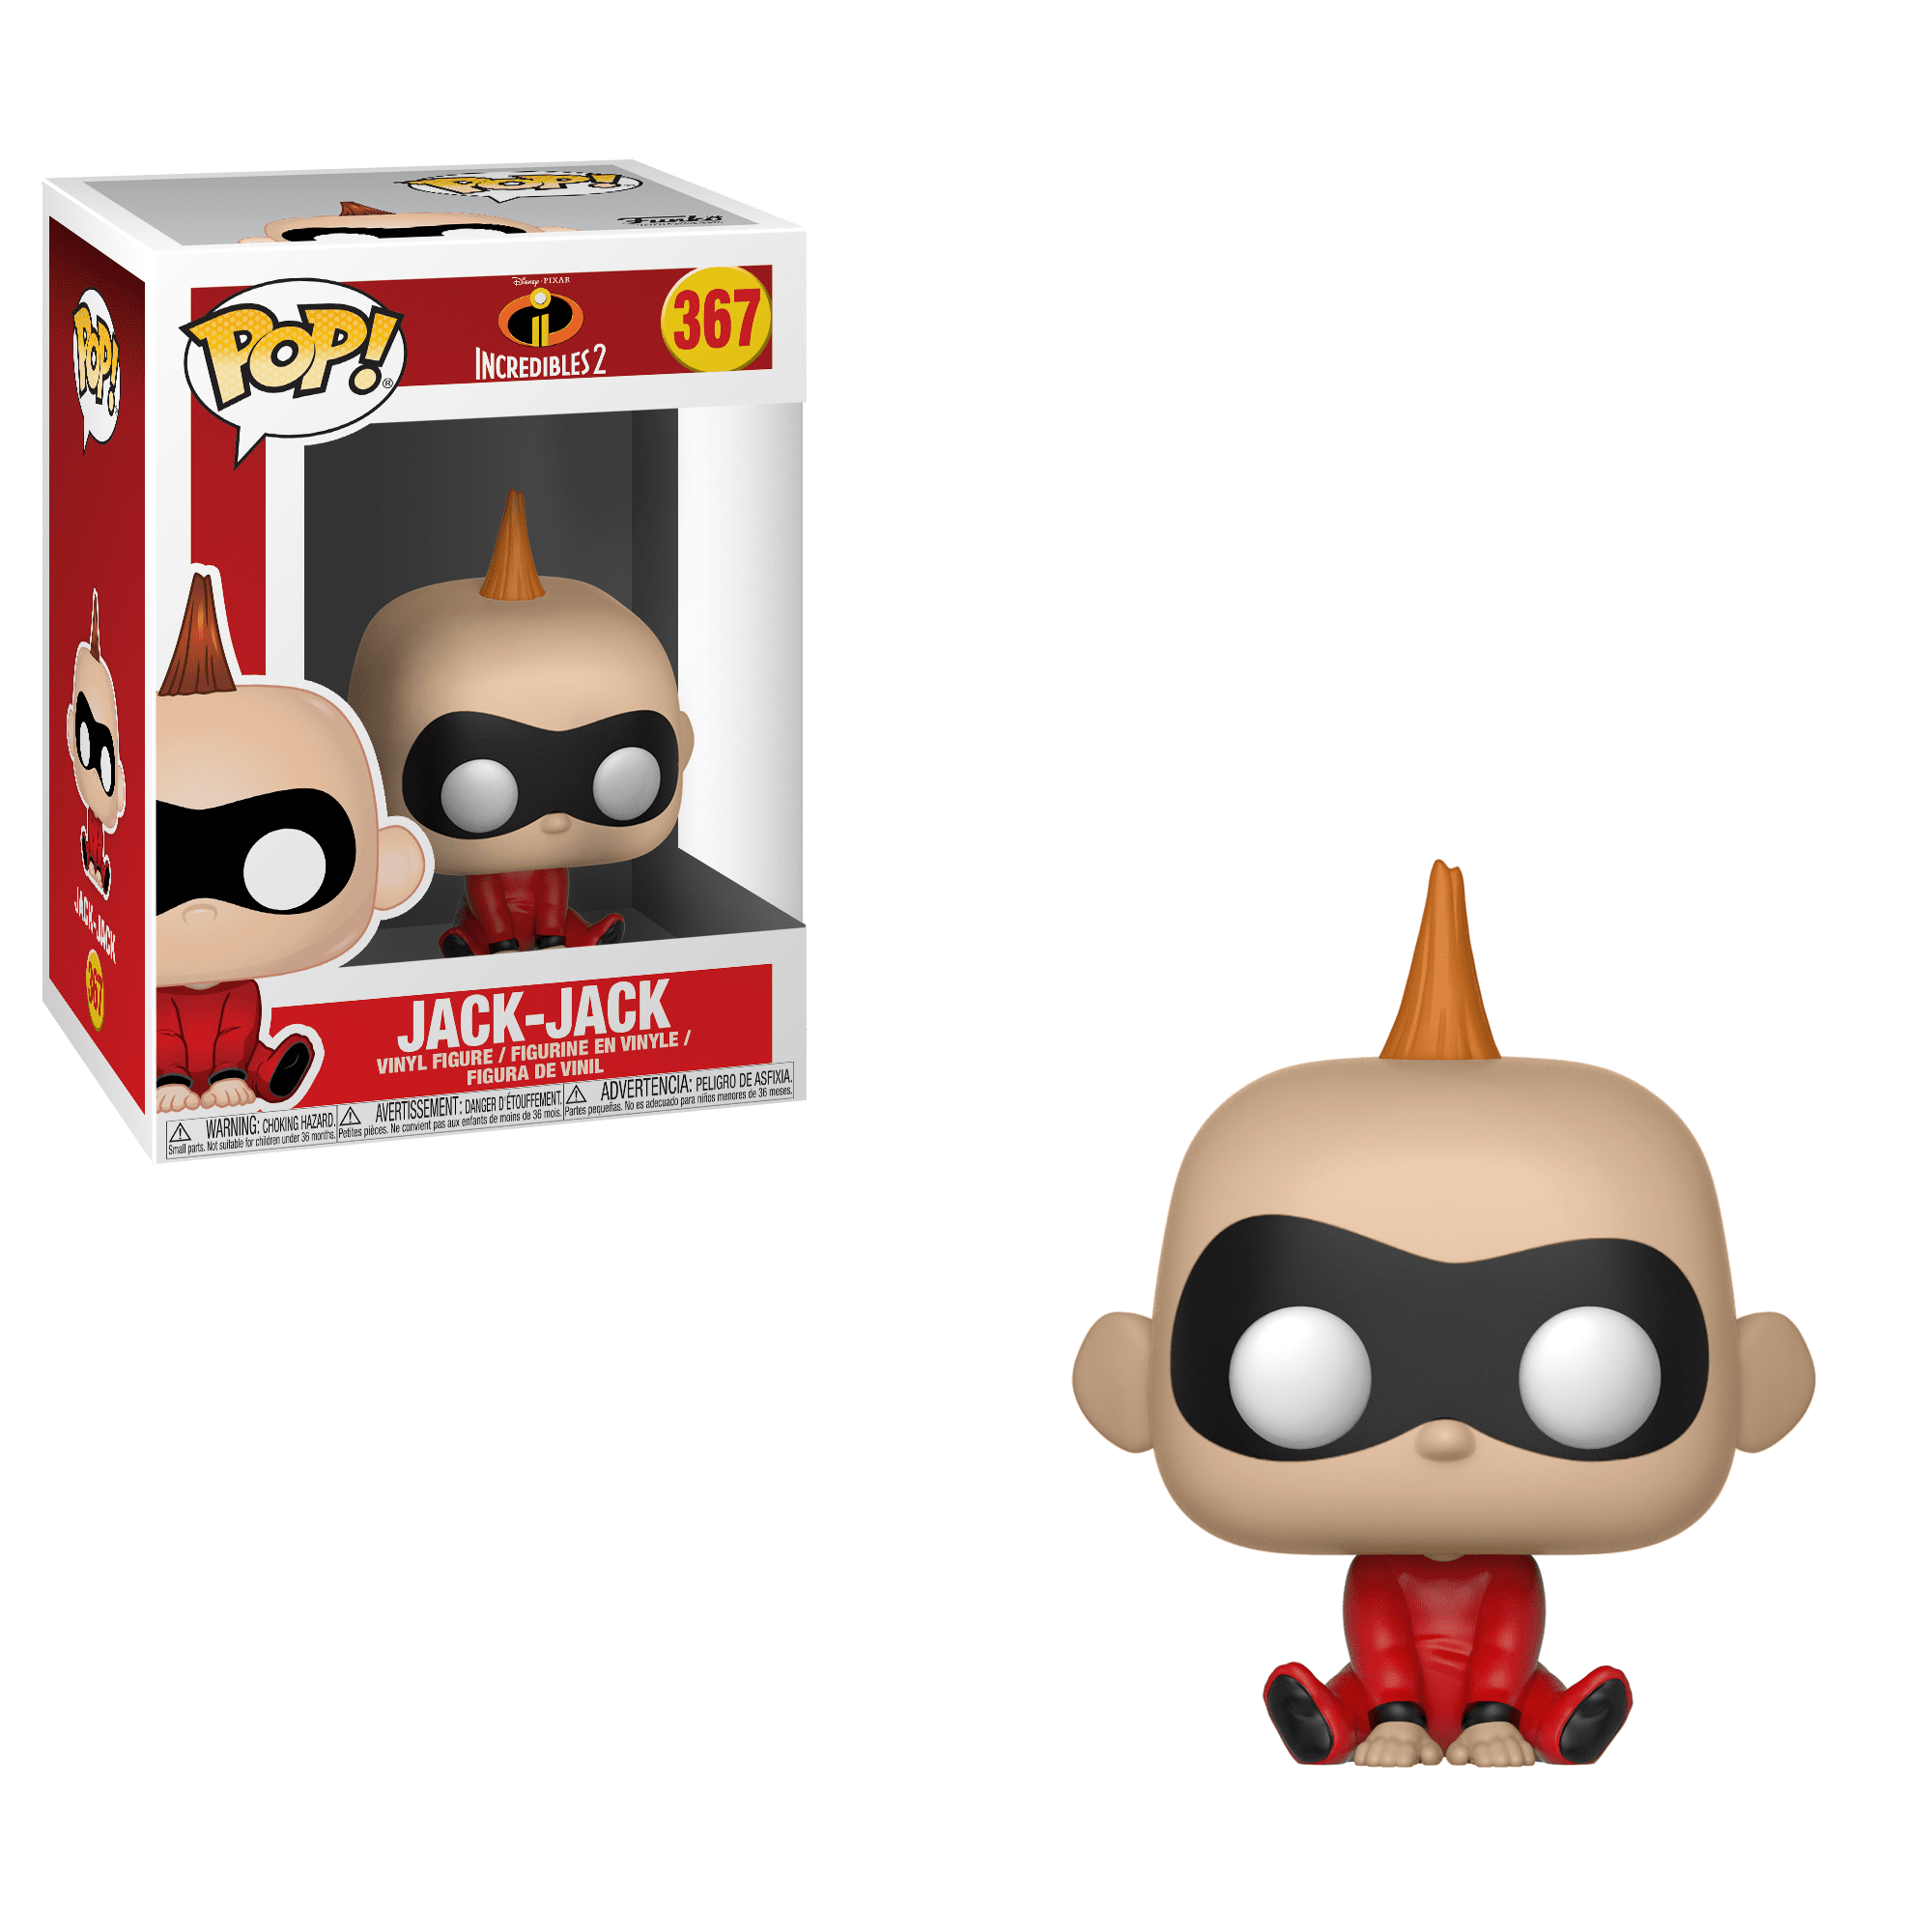 Funko Pop! Jack-Jack (The Incredibles)